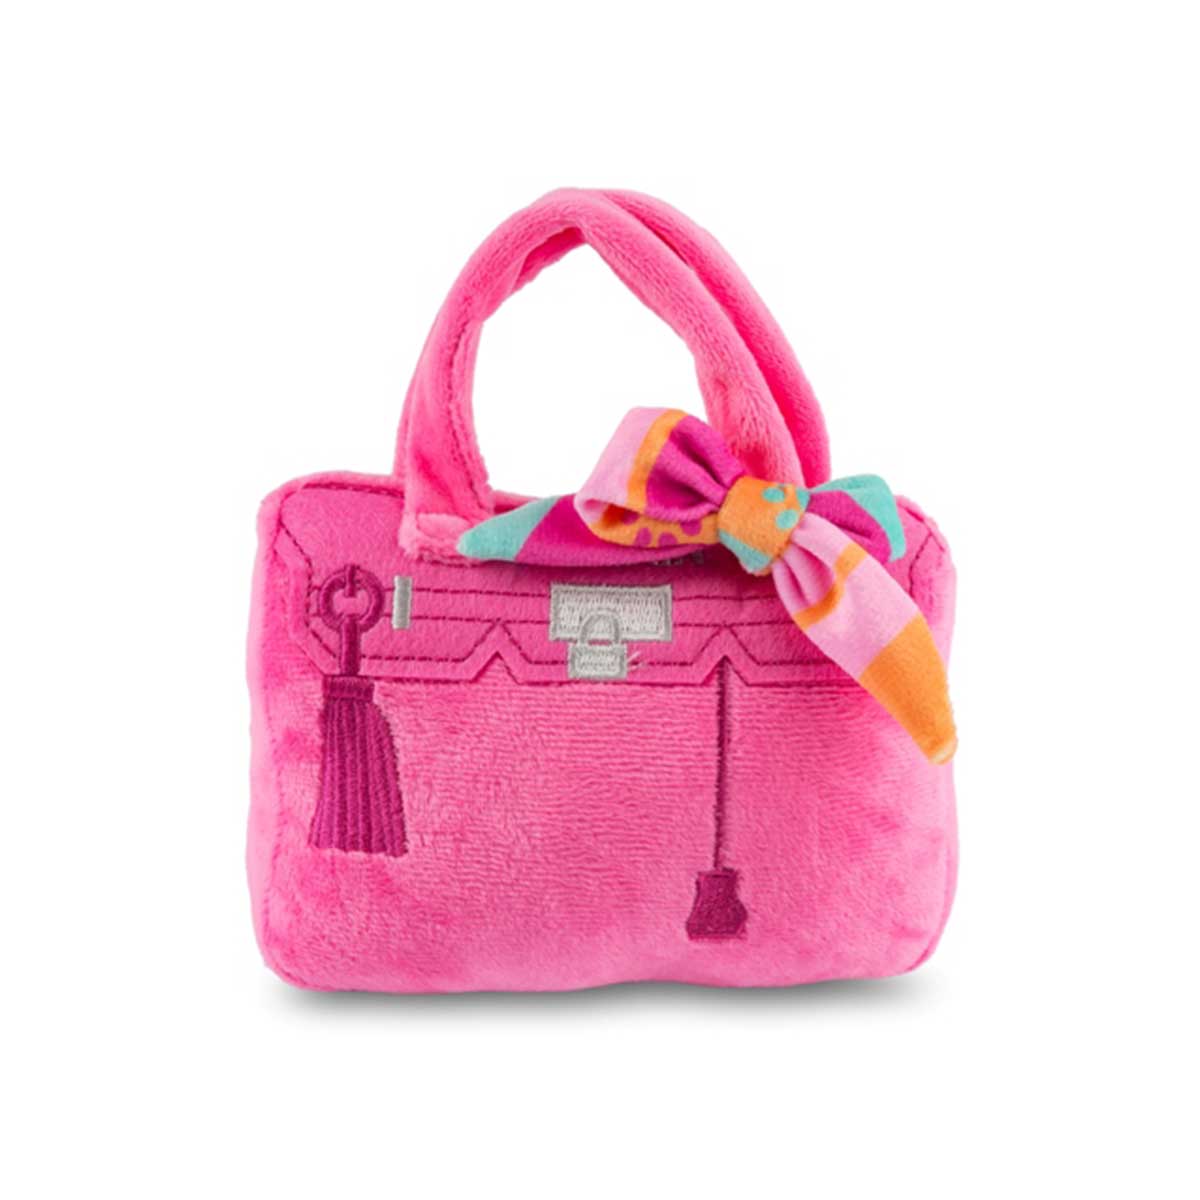 Chic Doggie Pink Barkin Handbag Plush Toy | Pawlicious & Company